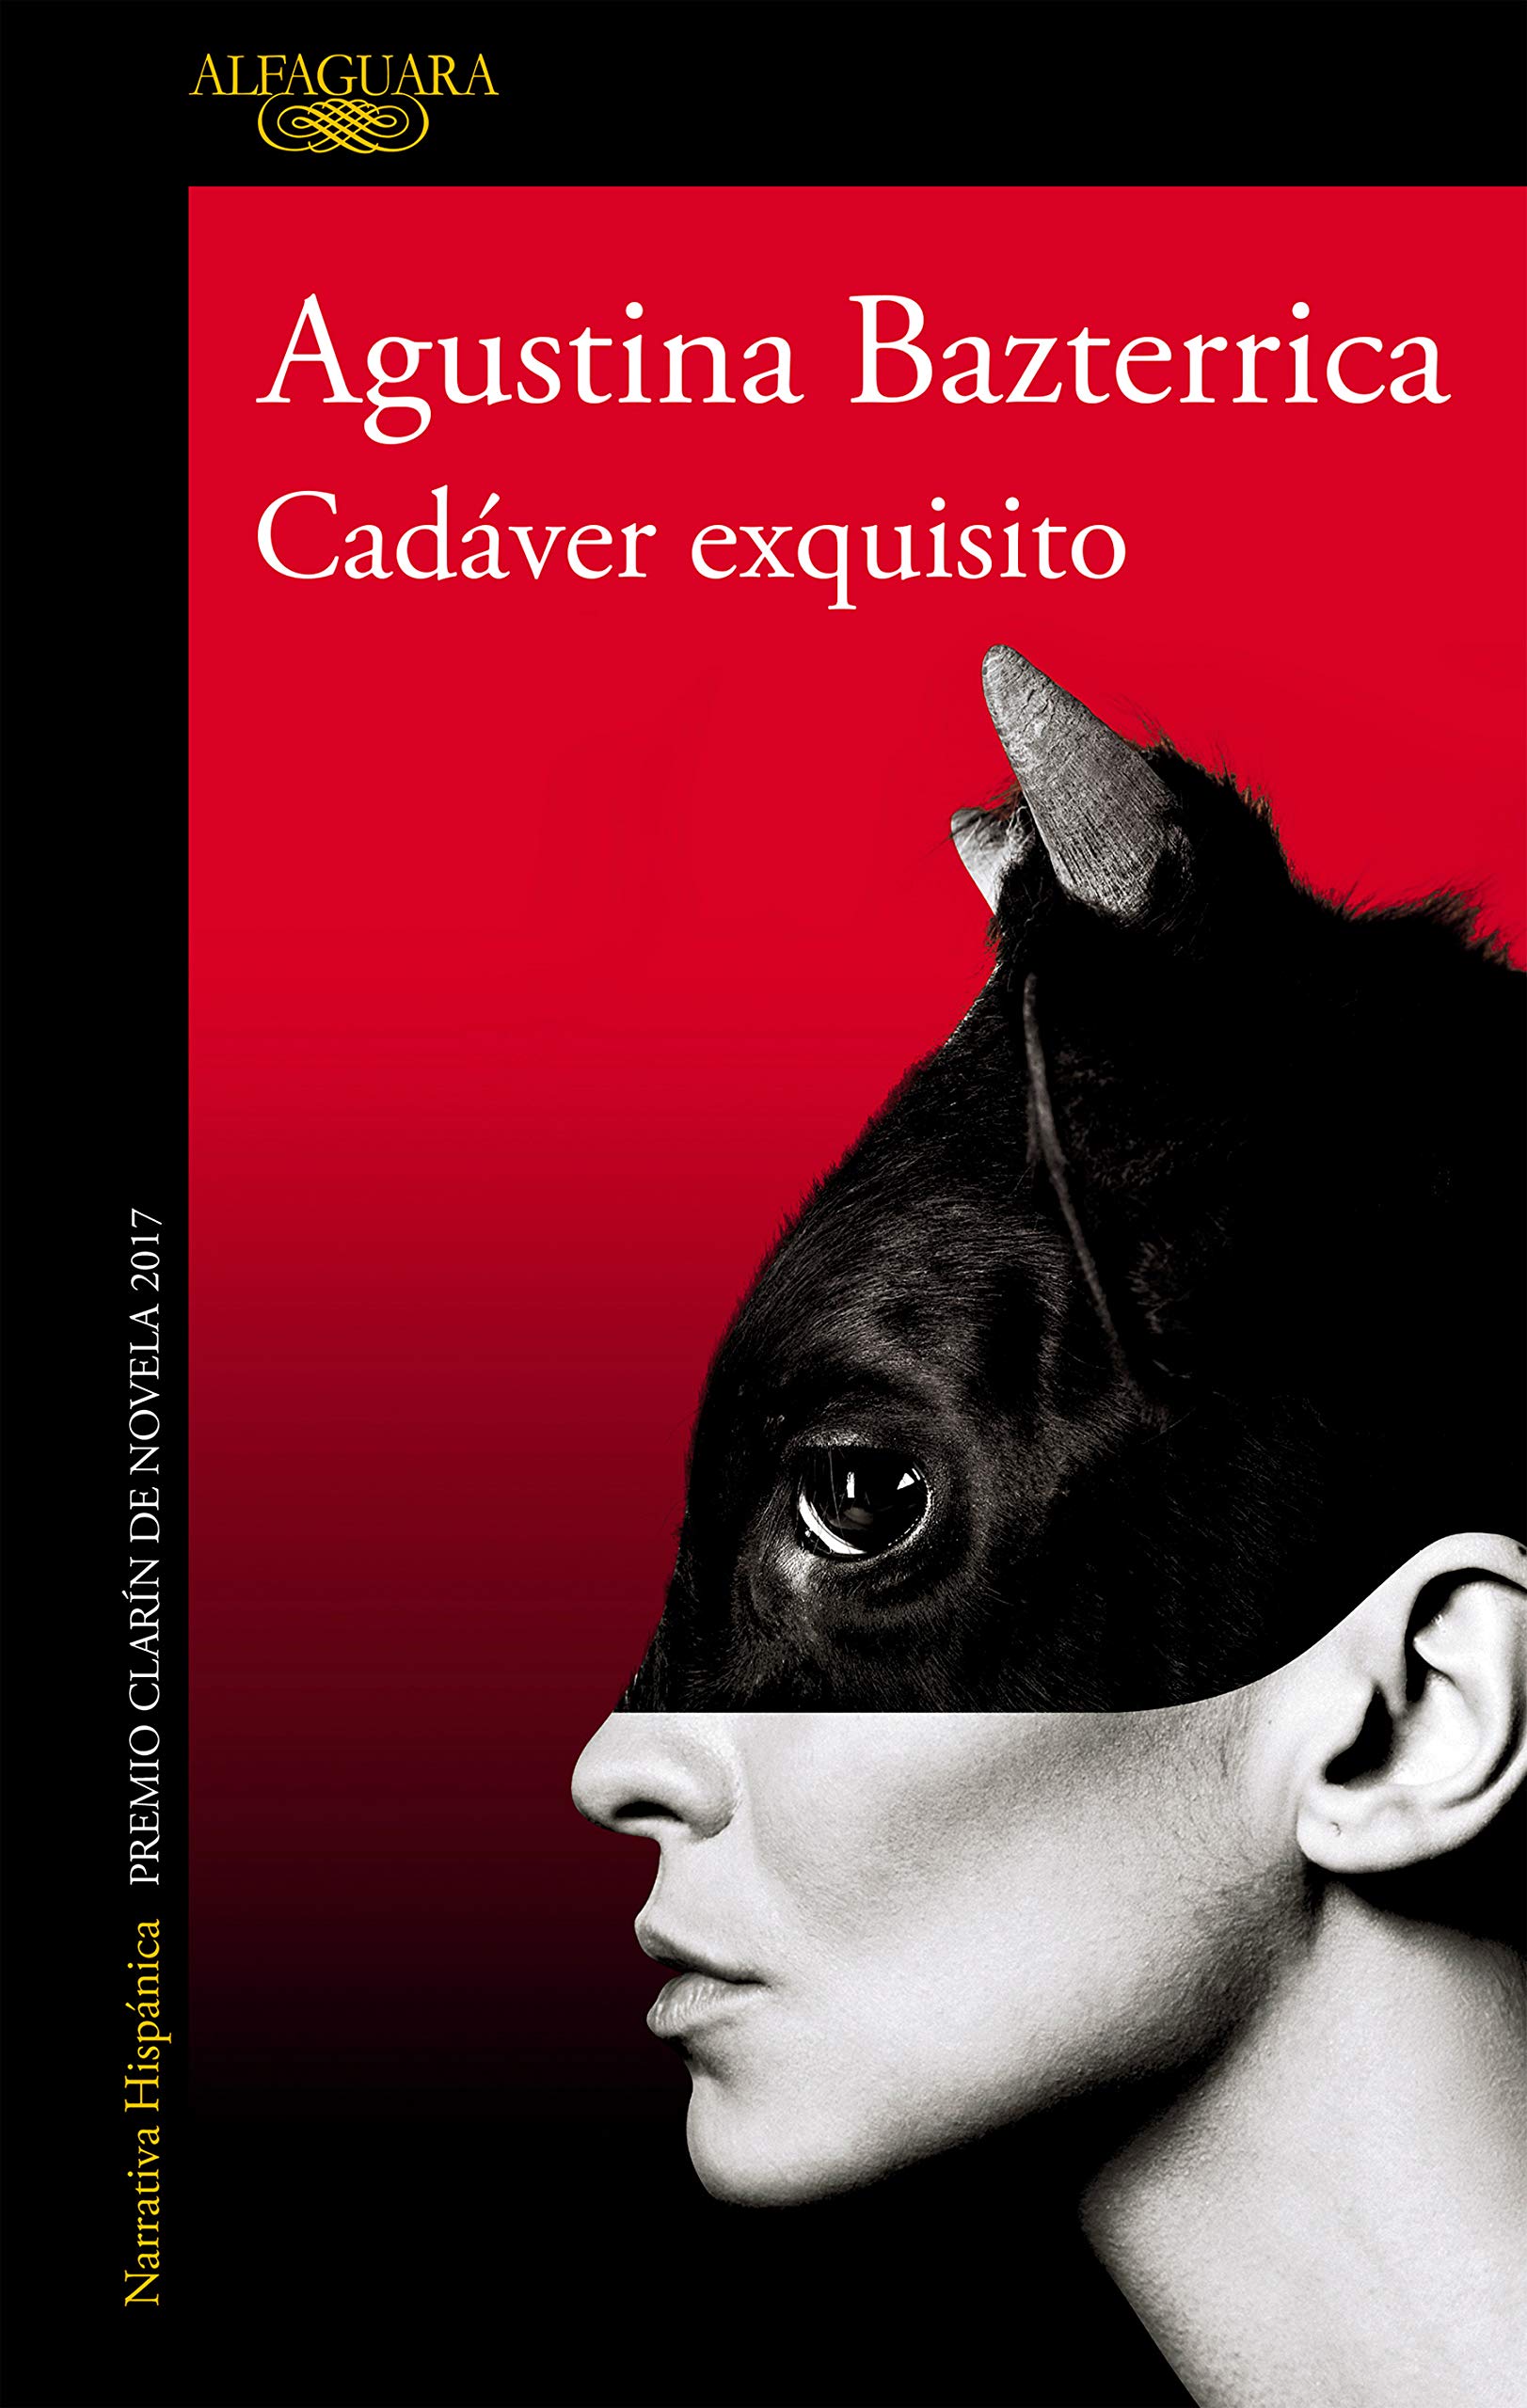 Agustina Bazterrica: literatura para desnaturalizar la crueldad